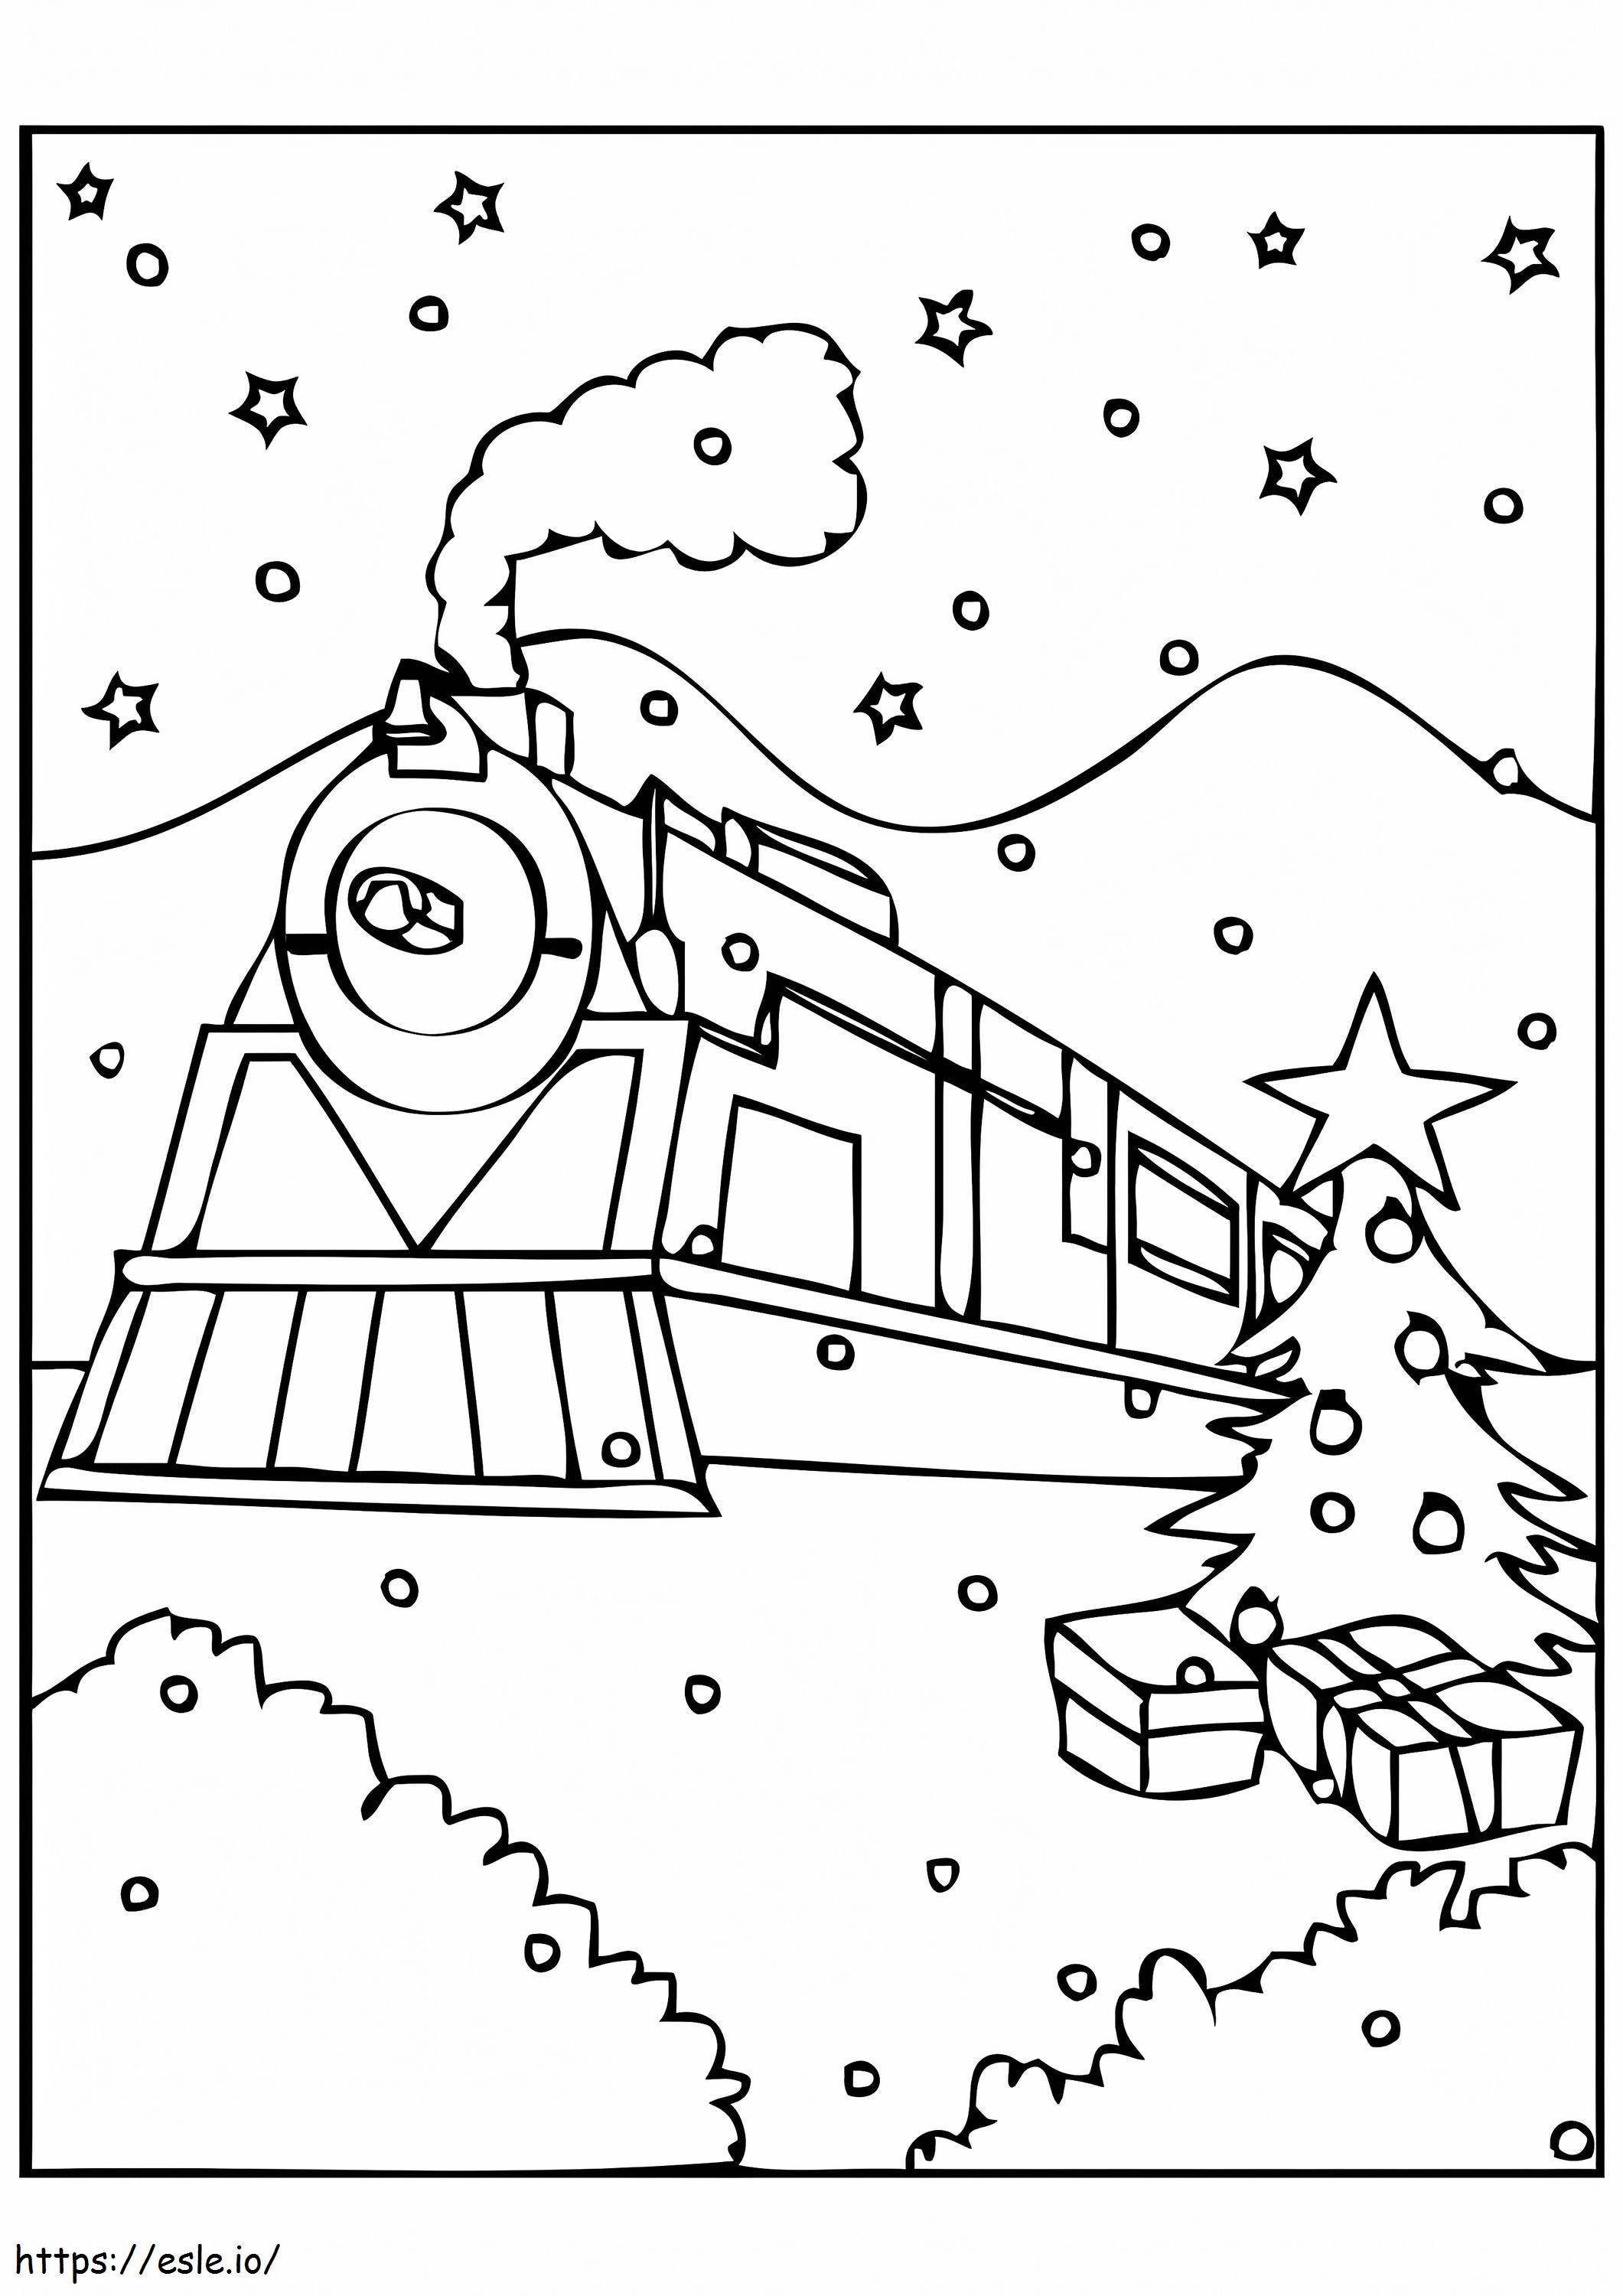 Printable Polar Express coloring page